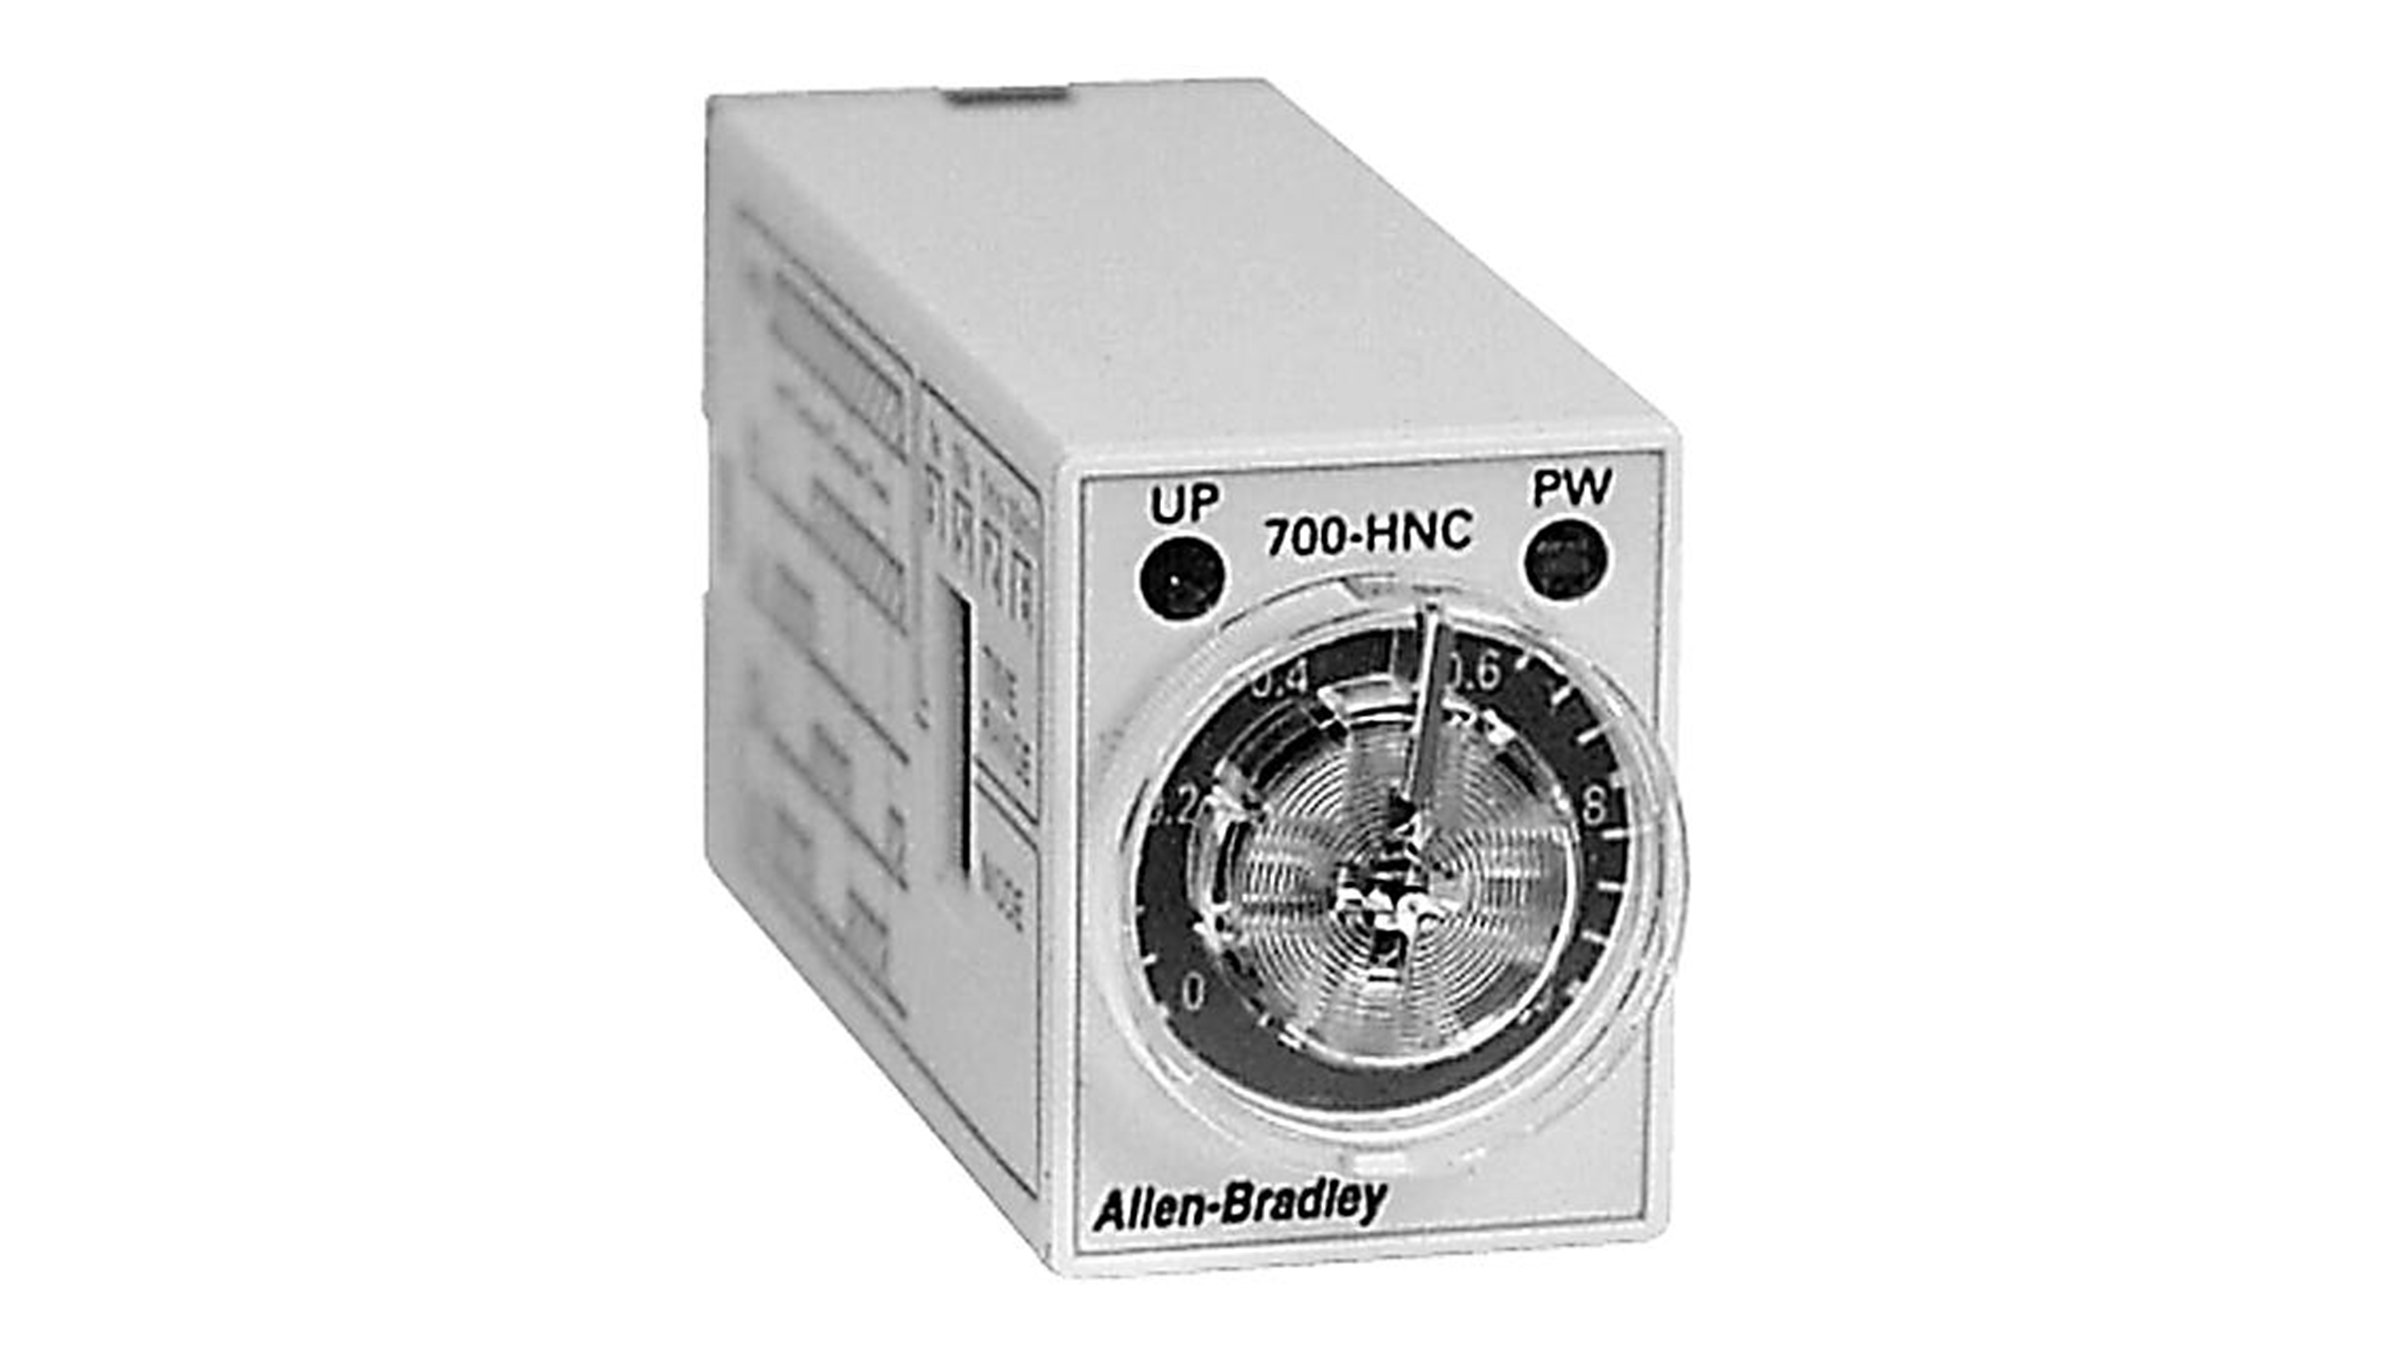 Allen-Bradley Bulletin 700-HNC 微型定时继电器跻身于市场上最小的定时继电器之列。